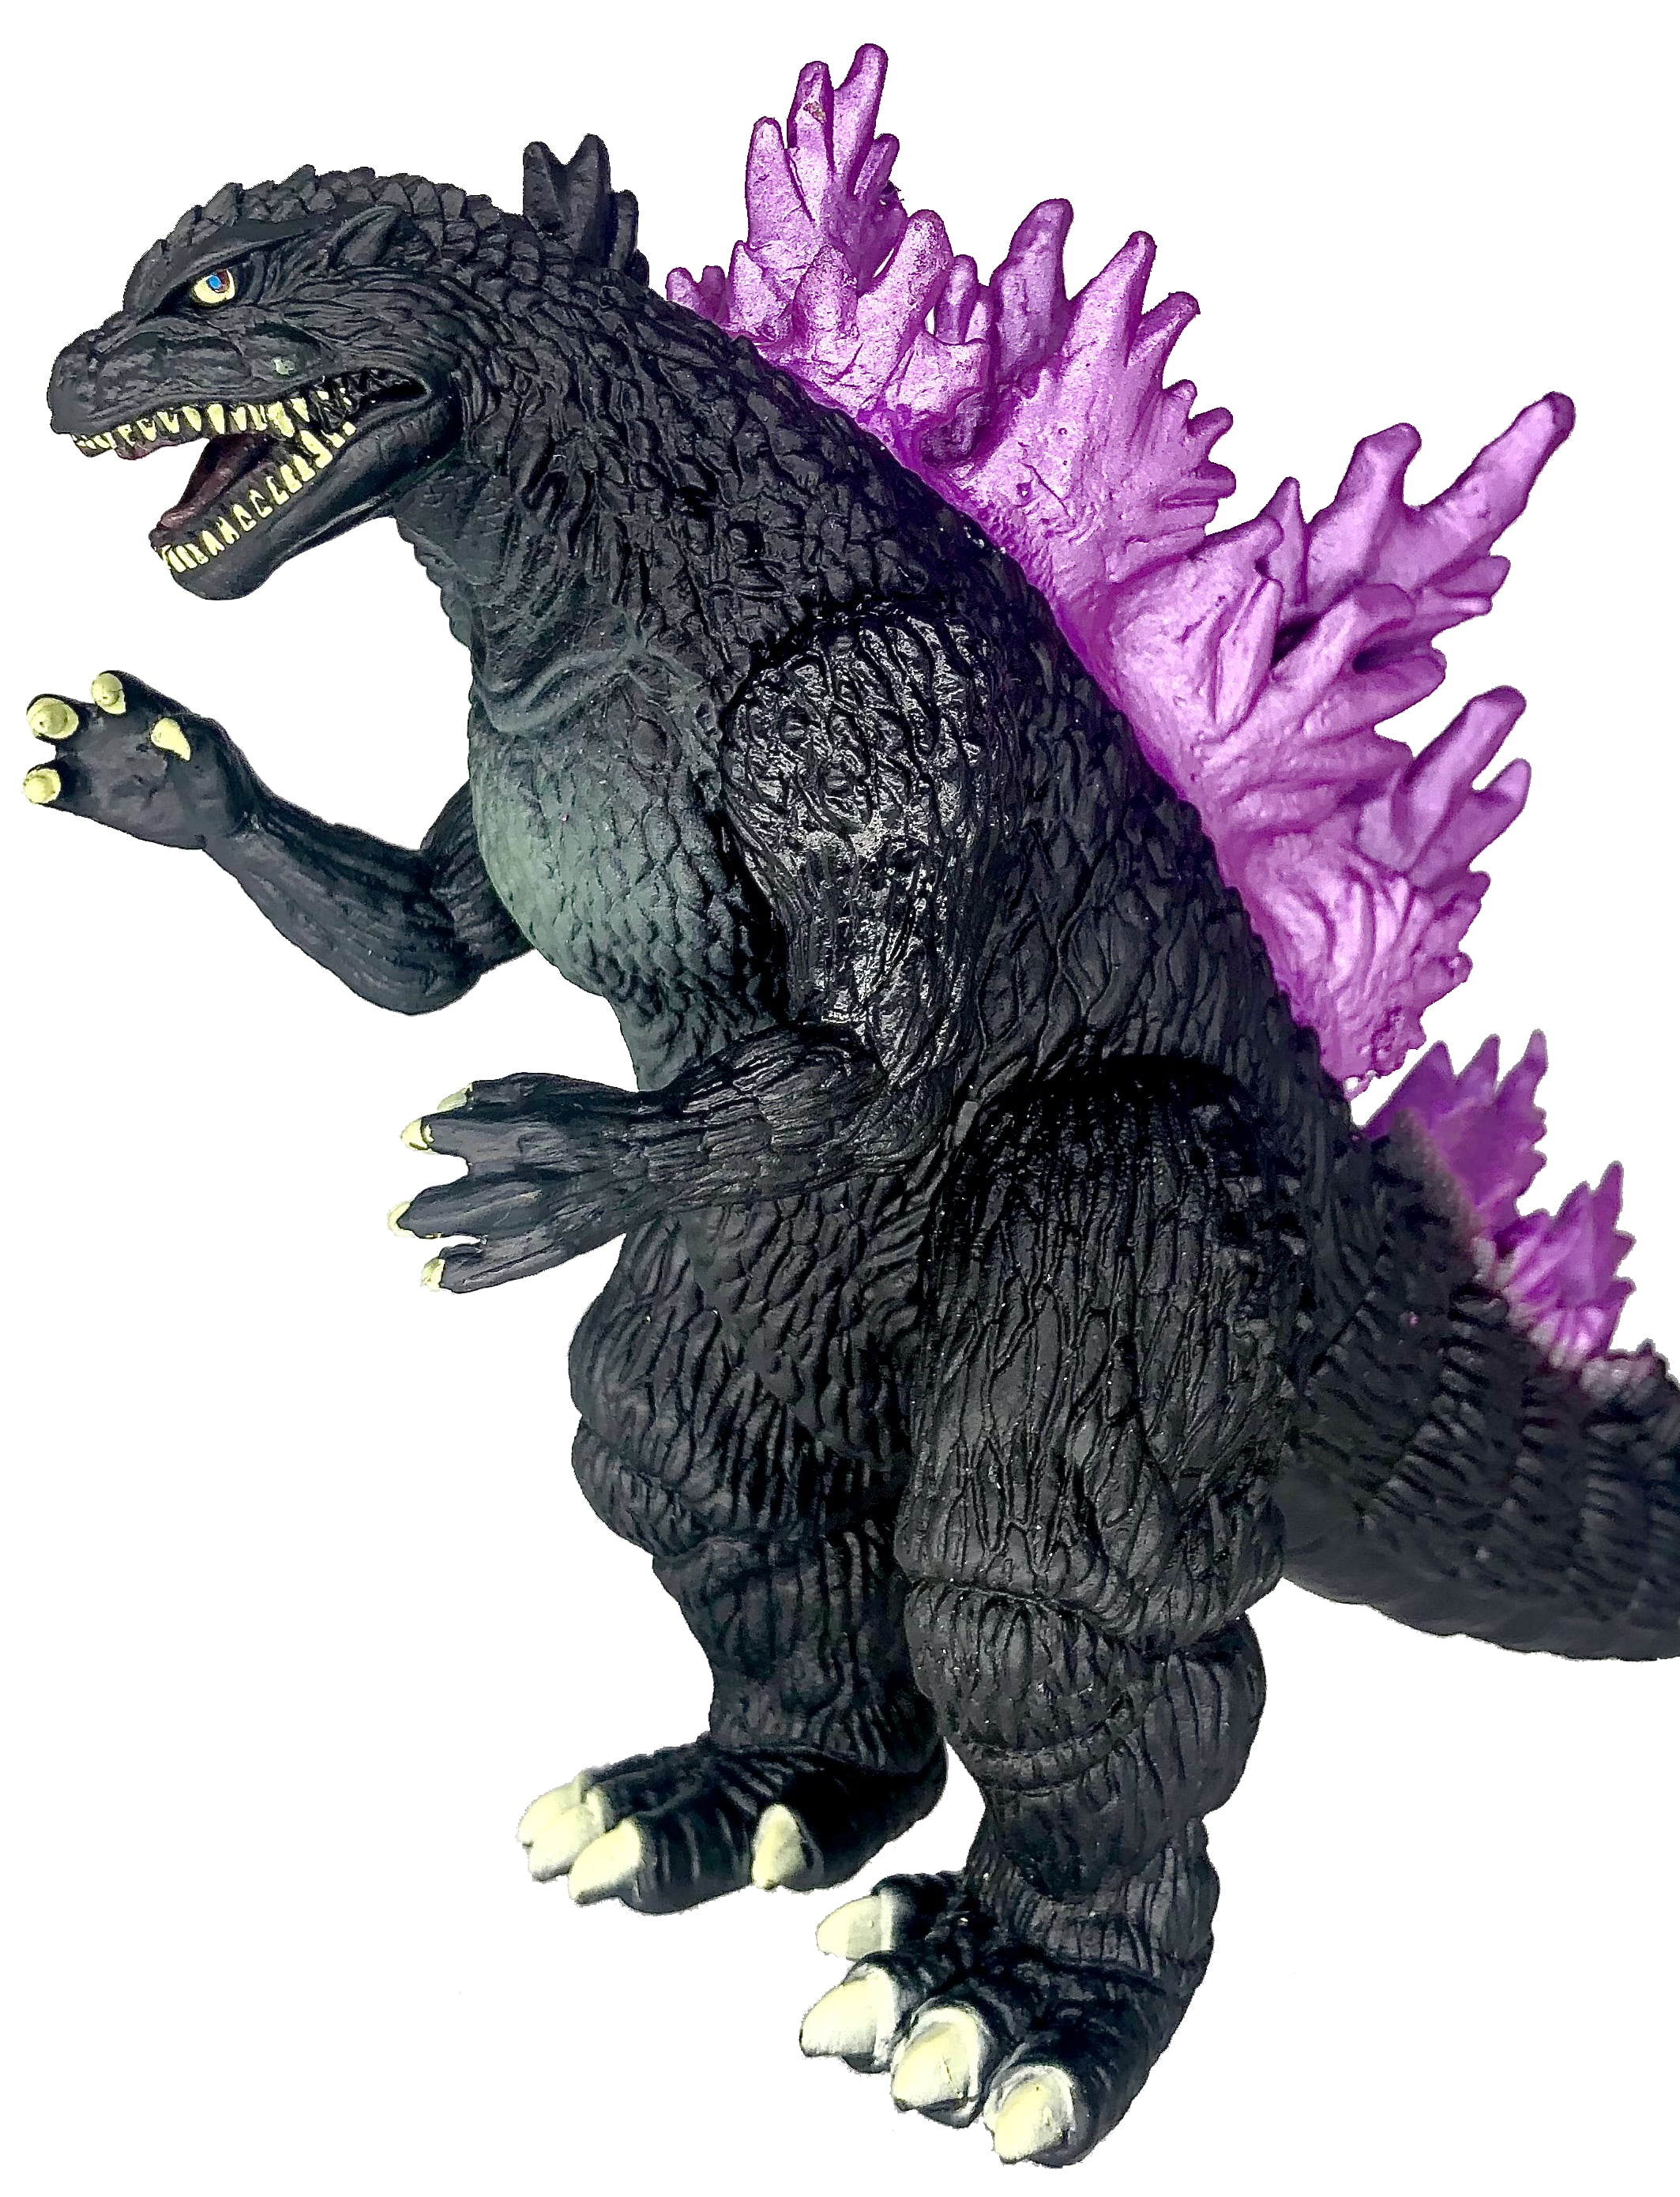 Action Figure Toy Dragons Dinosaurs Godzilla Animals Birthday Gift Set 